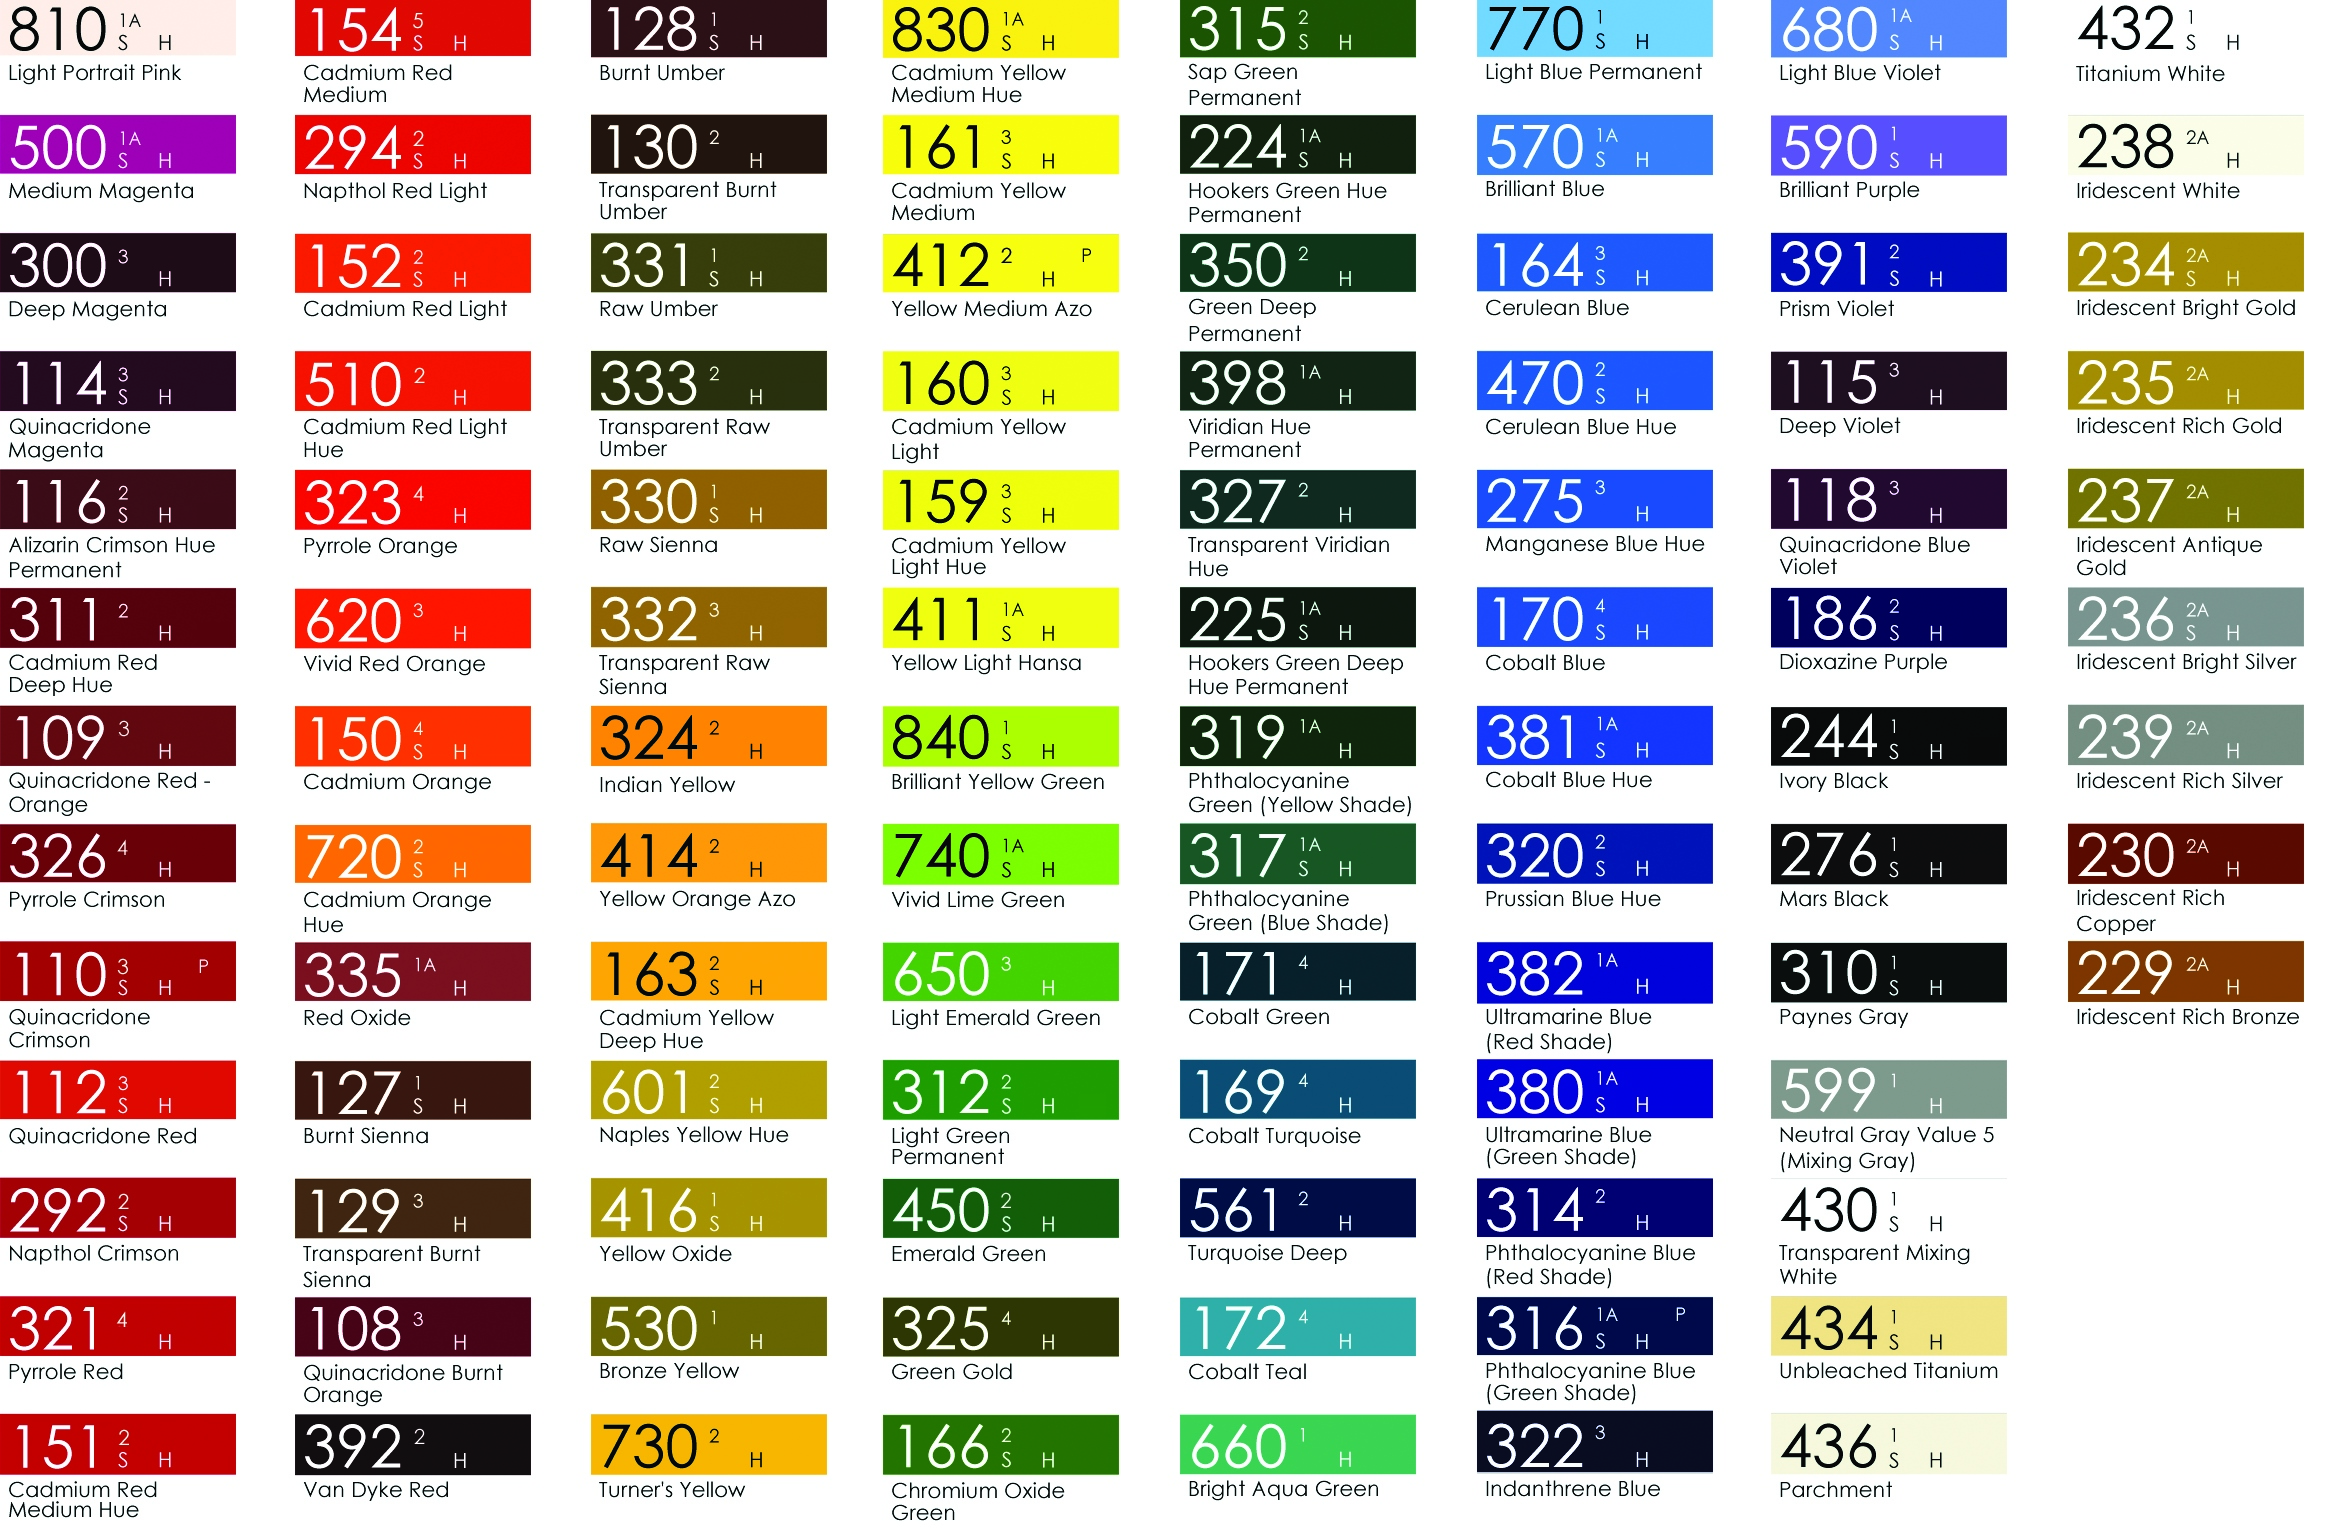 Liquitex Heavy Body Color Chart